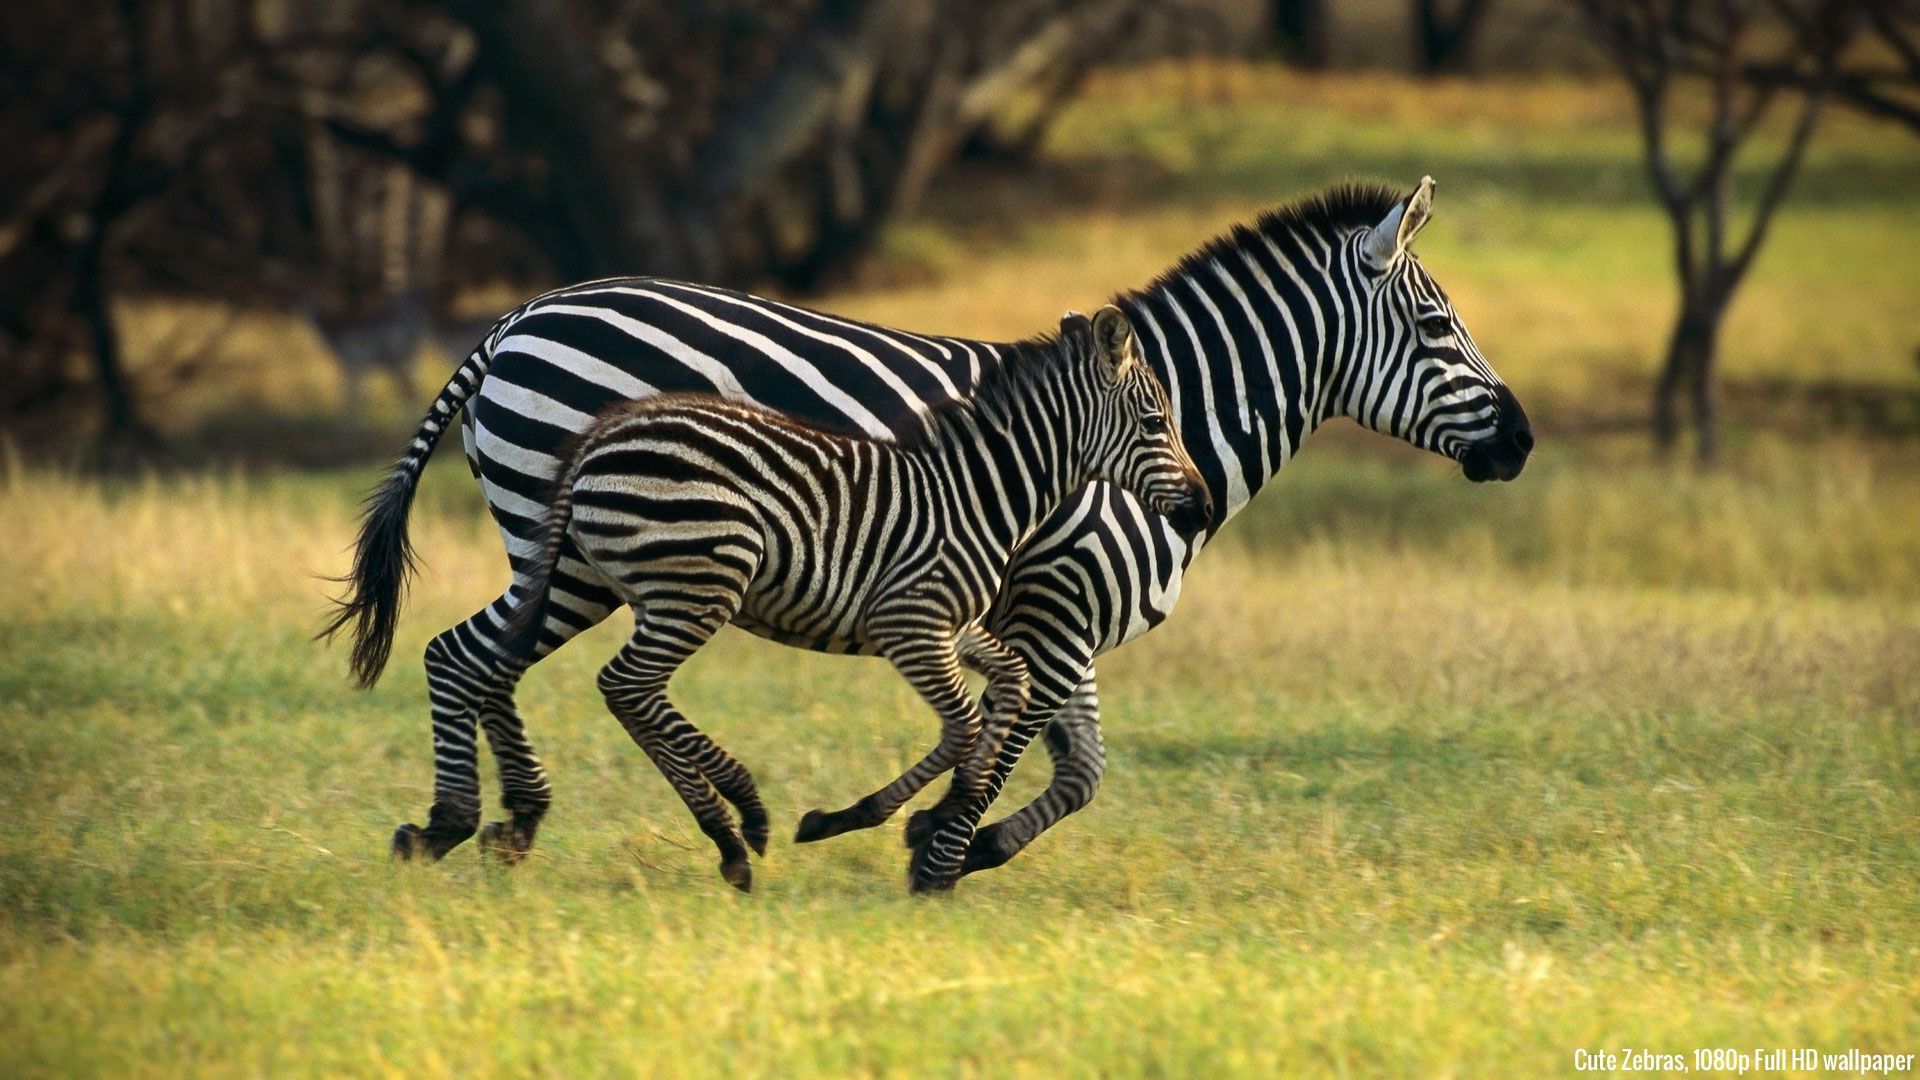 Download Wallpaper, Zebras, Cute animals 1080p, Full HD | Wild animals